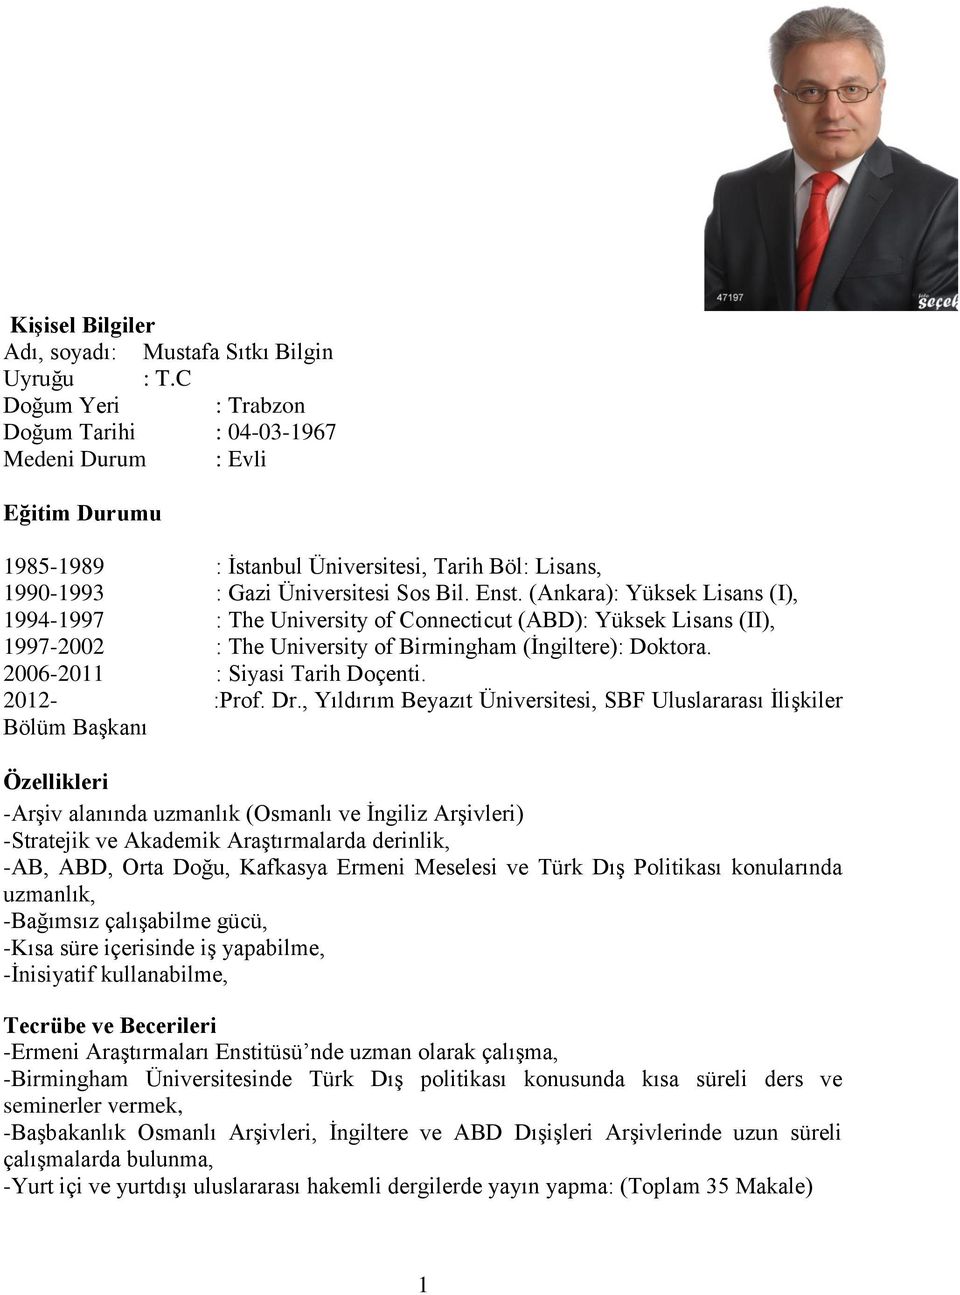 (Ankara): Yüksek Lisans (I), 1994-1997 : The University of Connecticut (ABD): Yüksek Lisans (II), 1997-2002 : The University of Birmingham (İngiltere): Doktora. 2006-2011 : Siyasi Tarih Doçenti.